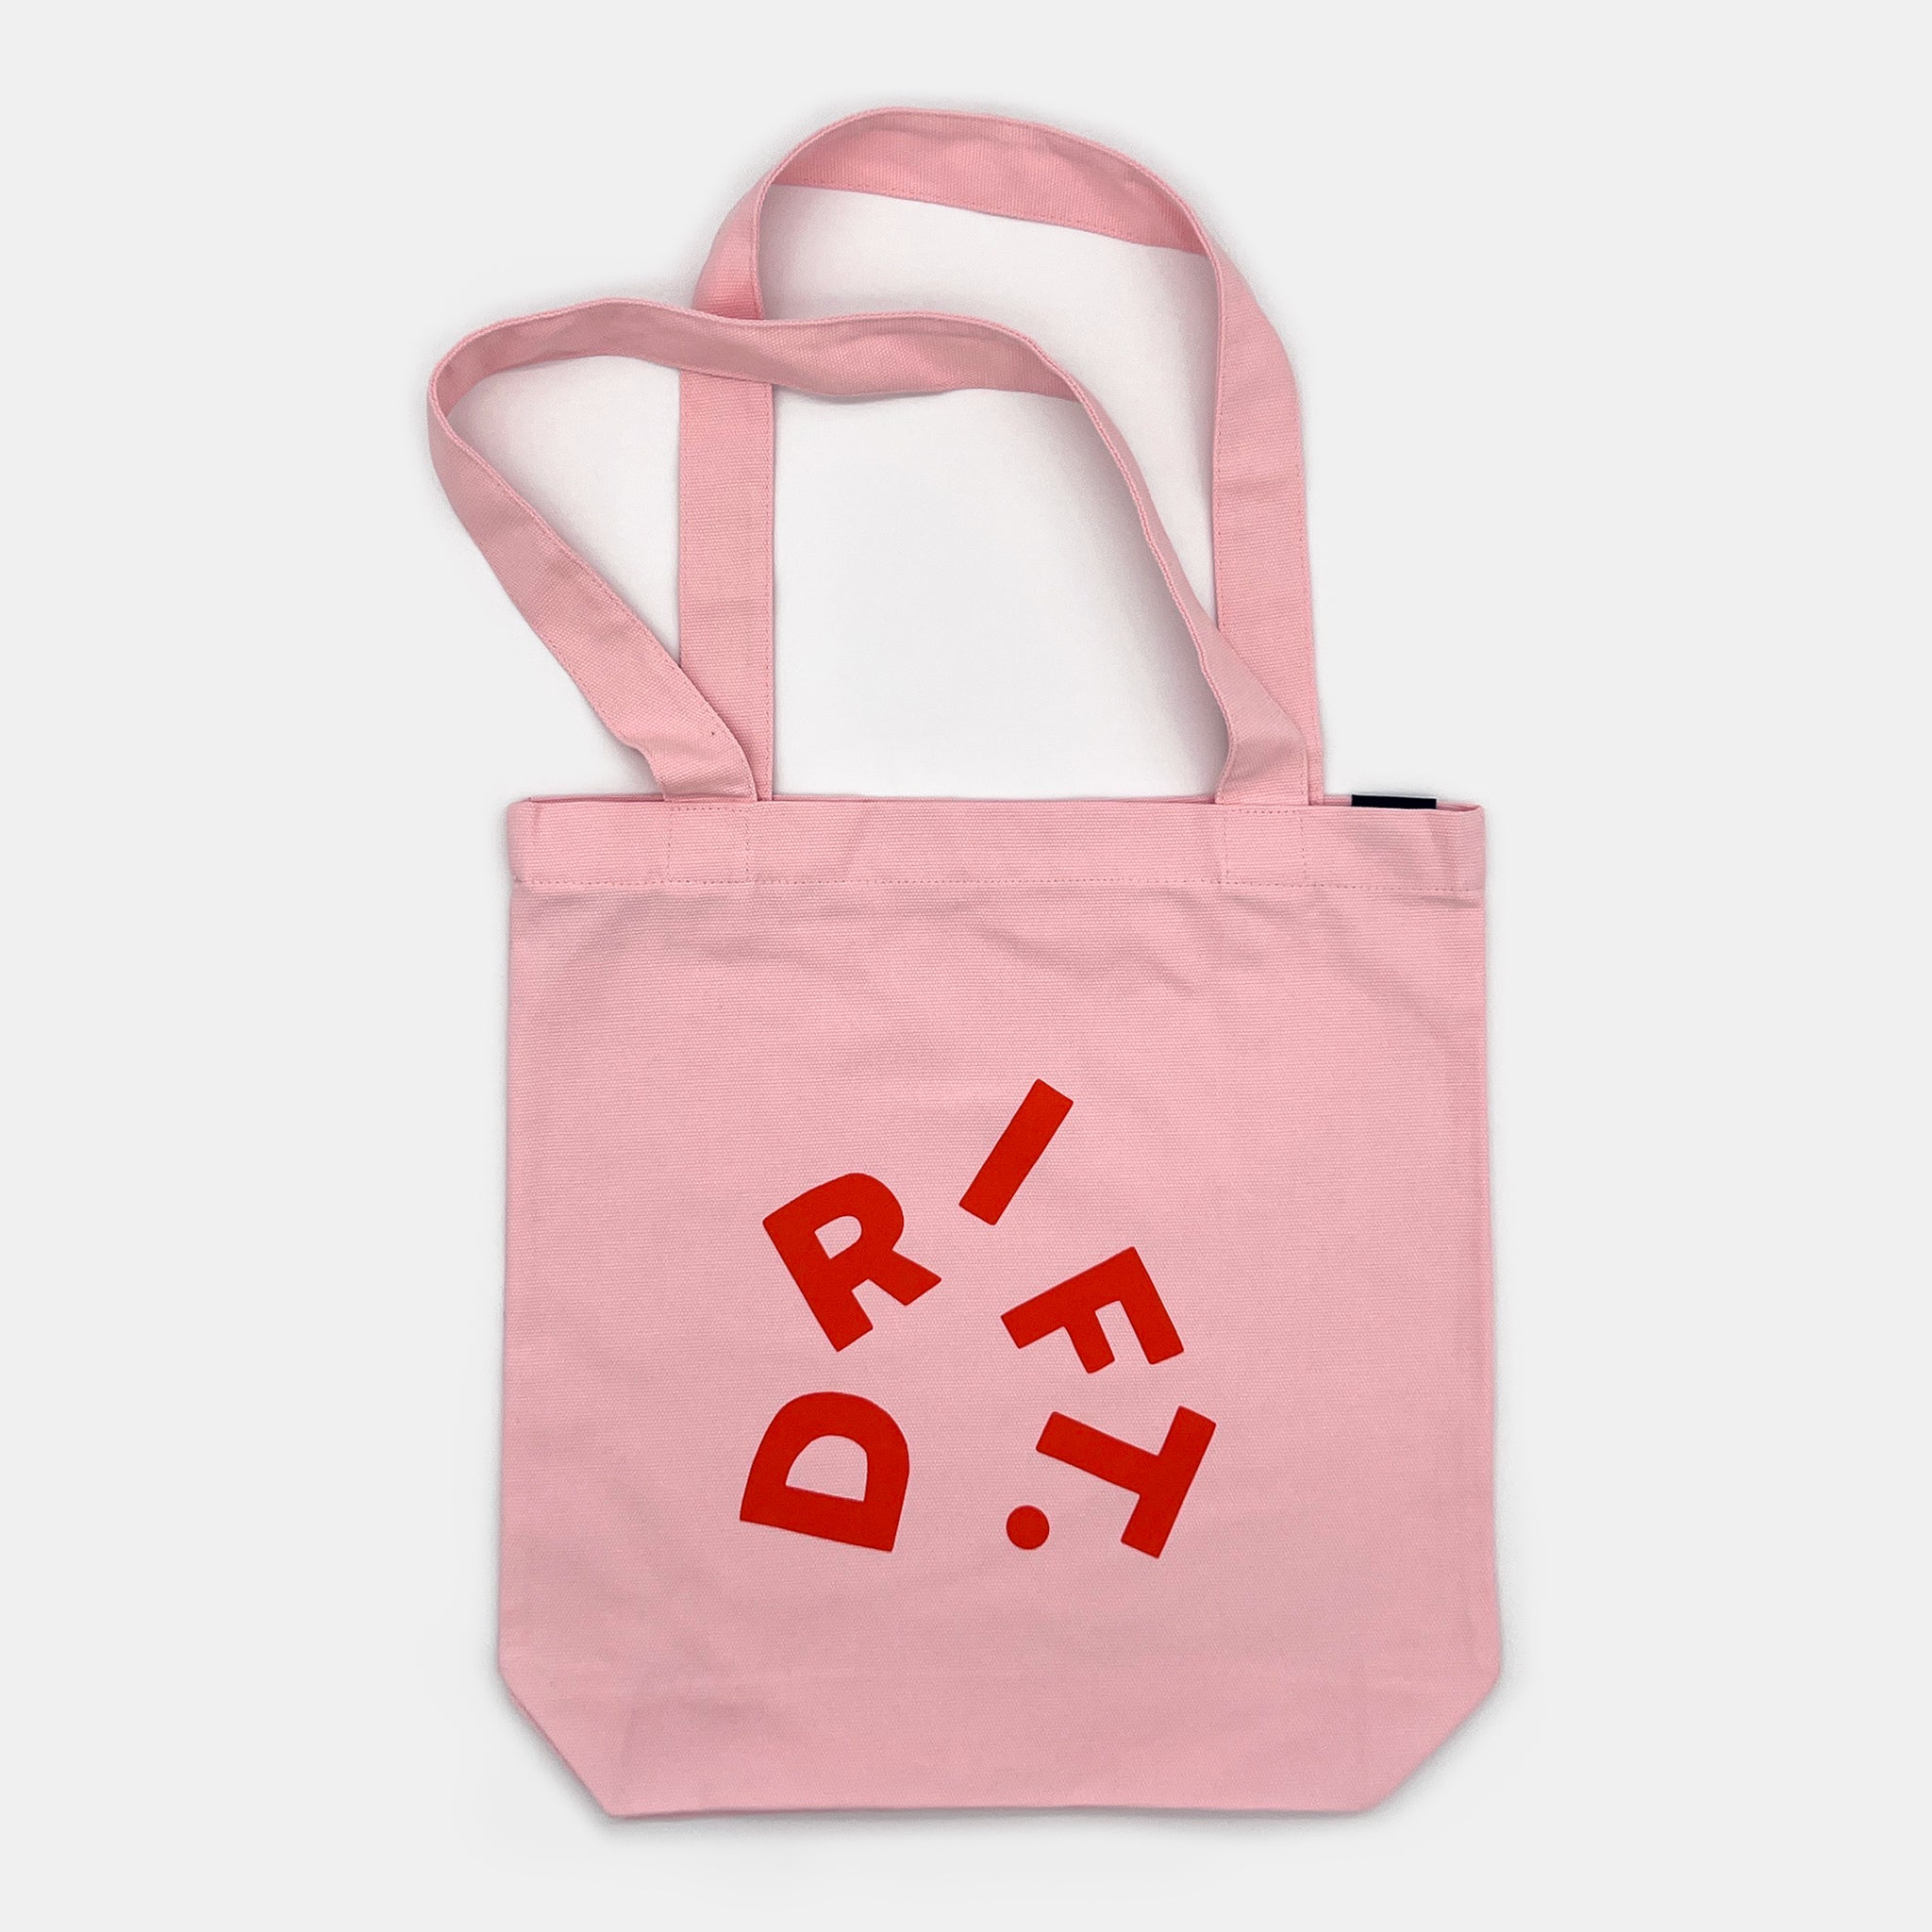 Hey guys! : r/handbags